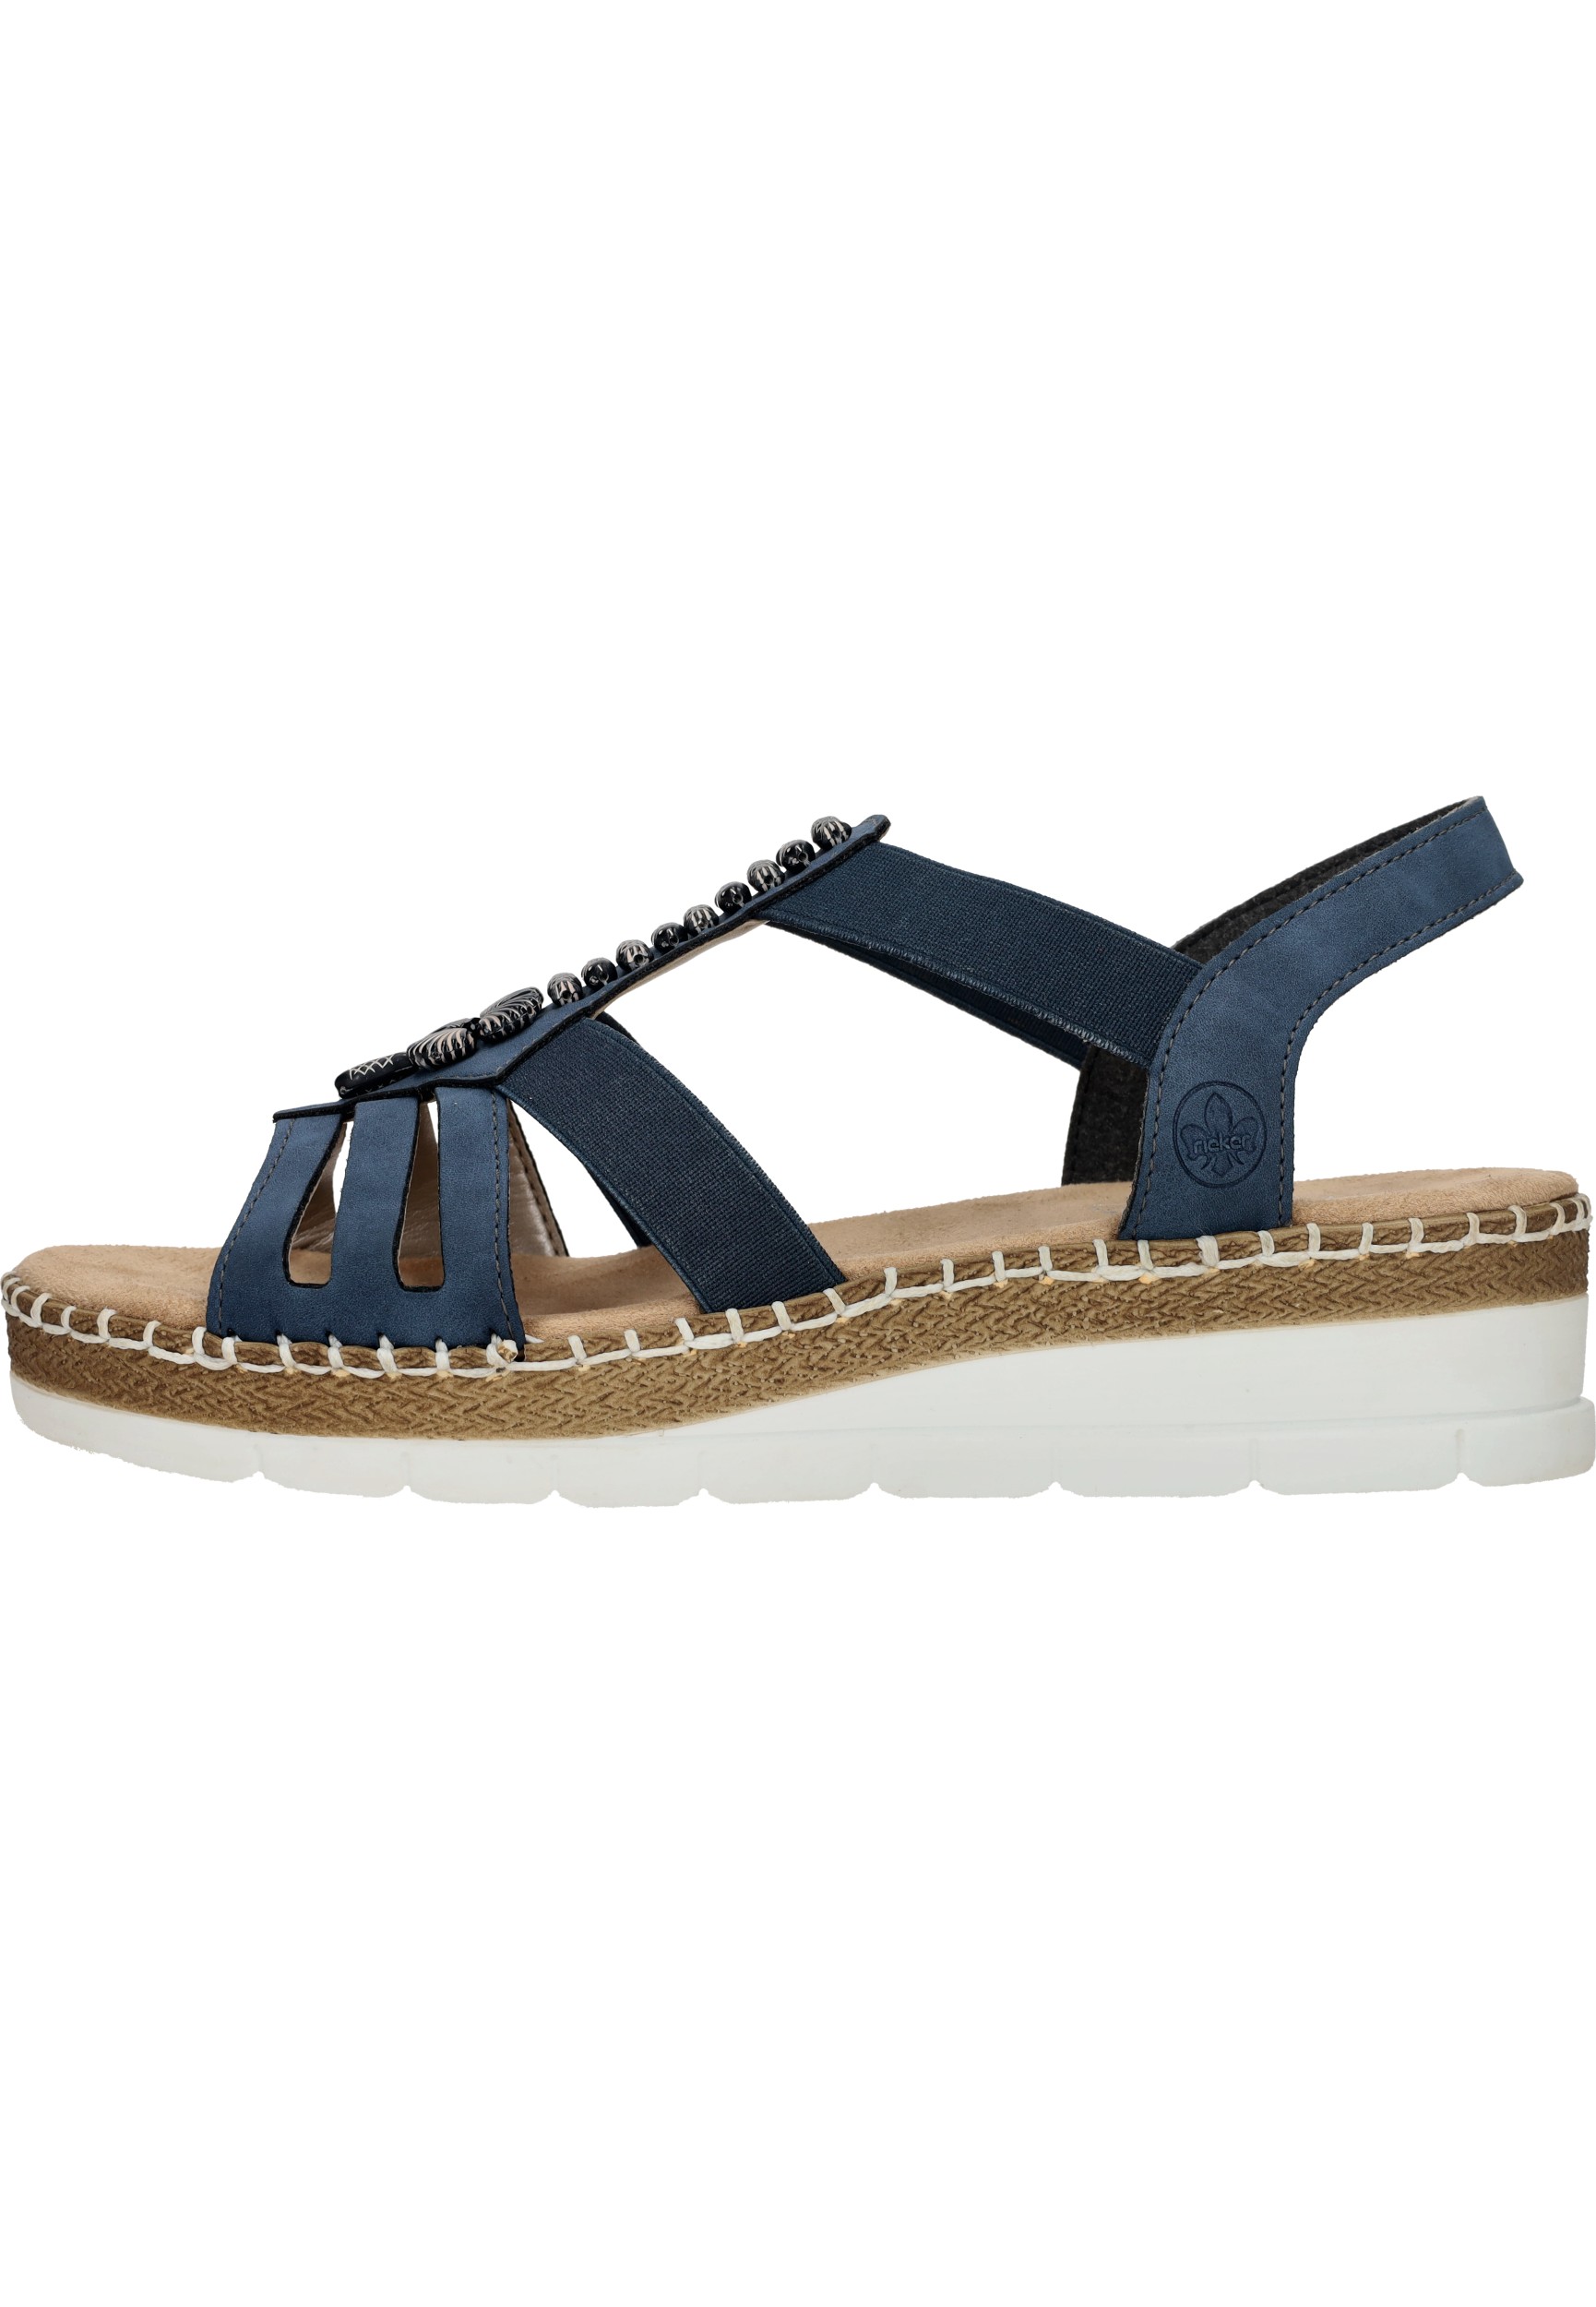 Rieker -Dames - blauw donker - sandalen - maat 40